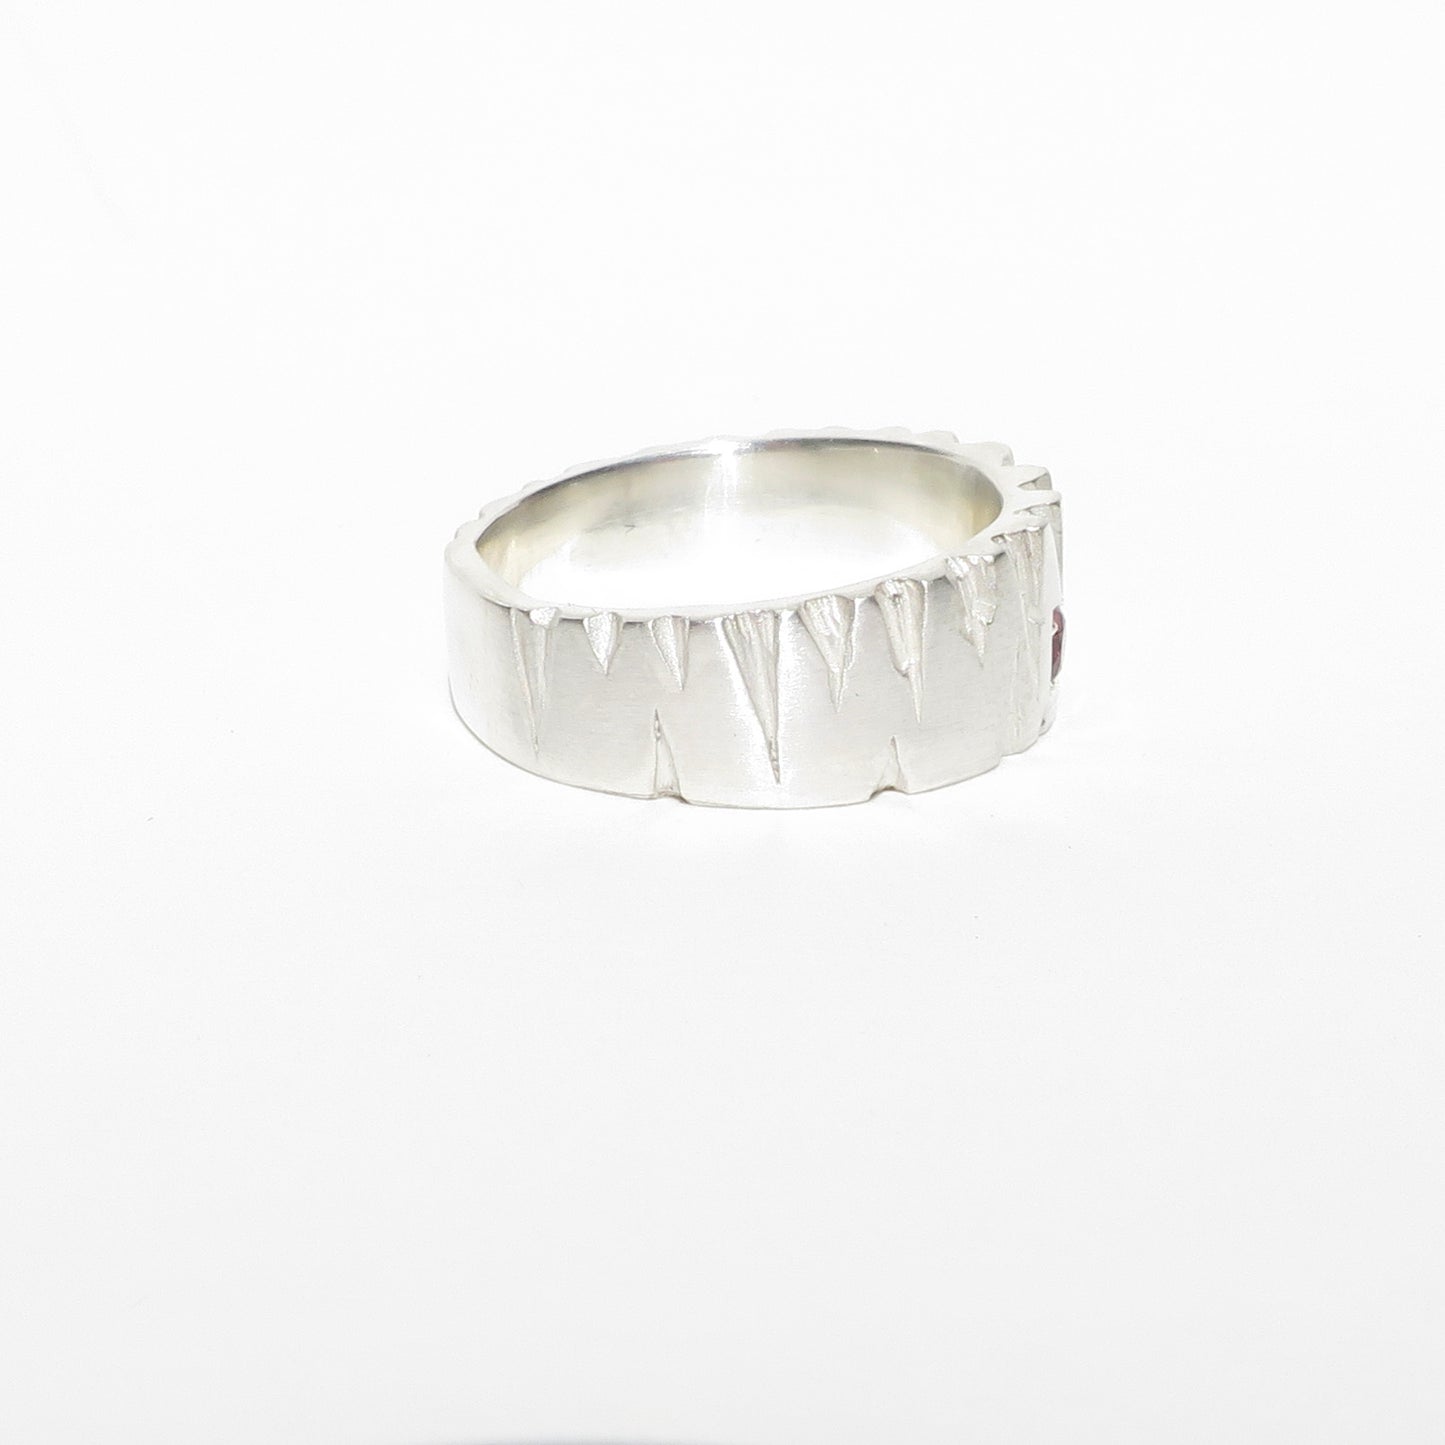 Silver Benbulben ring with yellow diamond